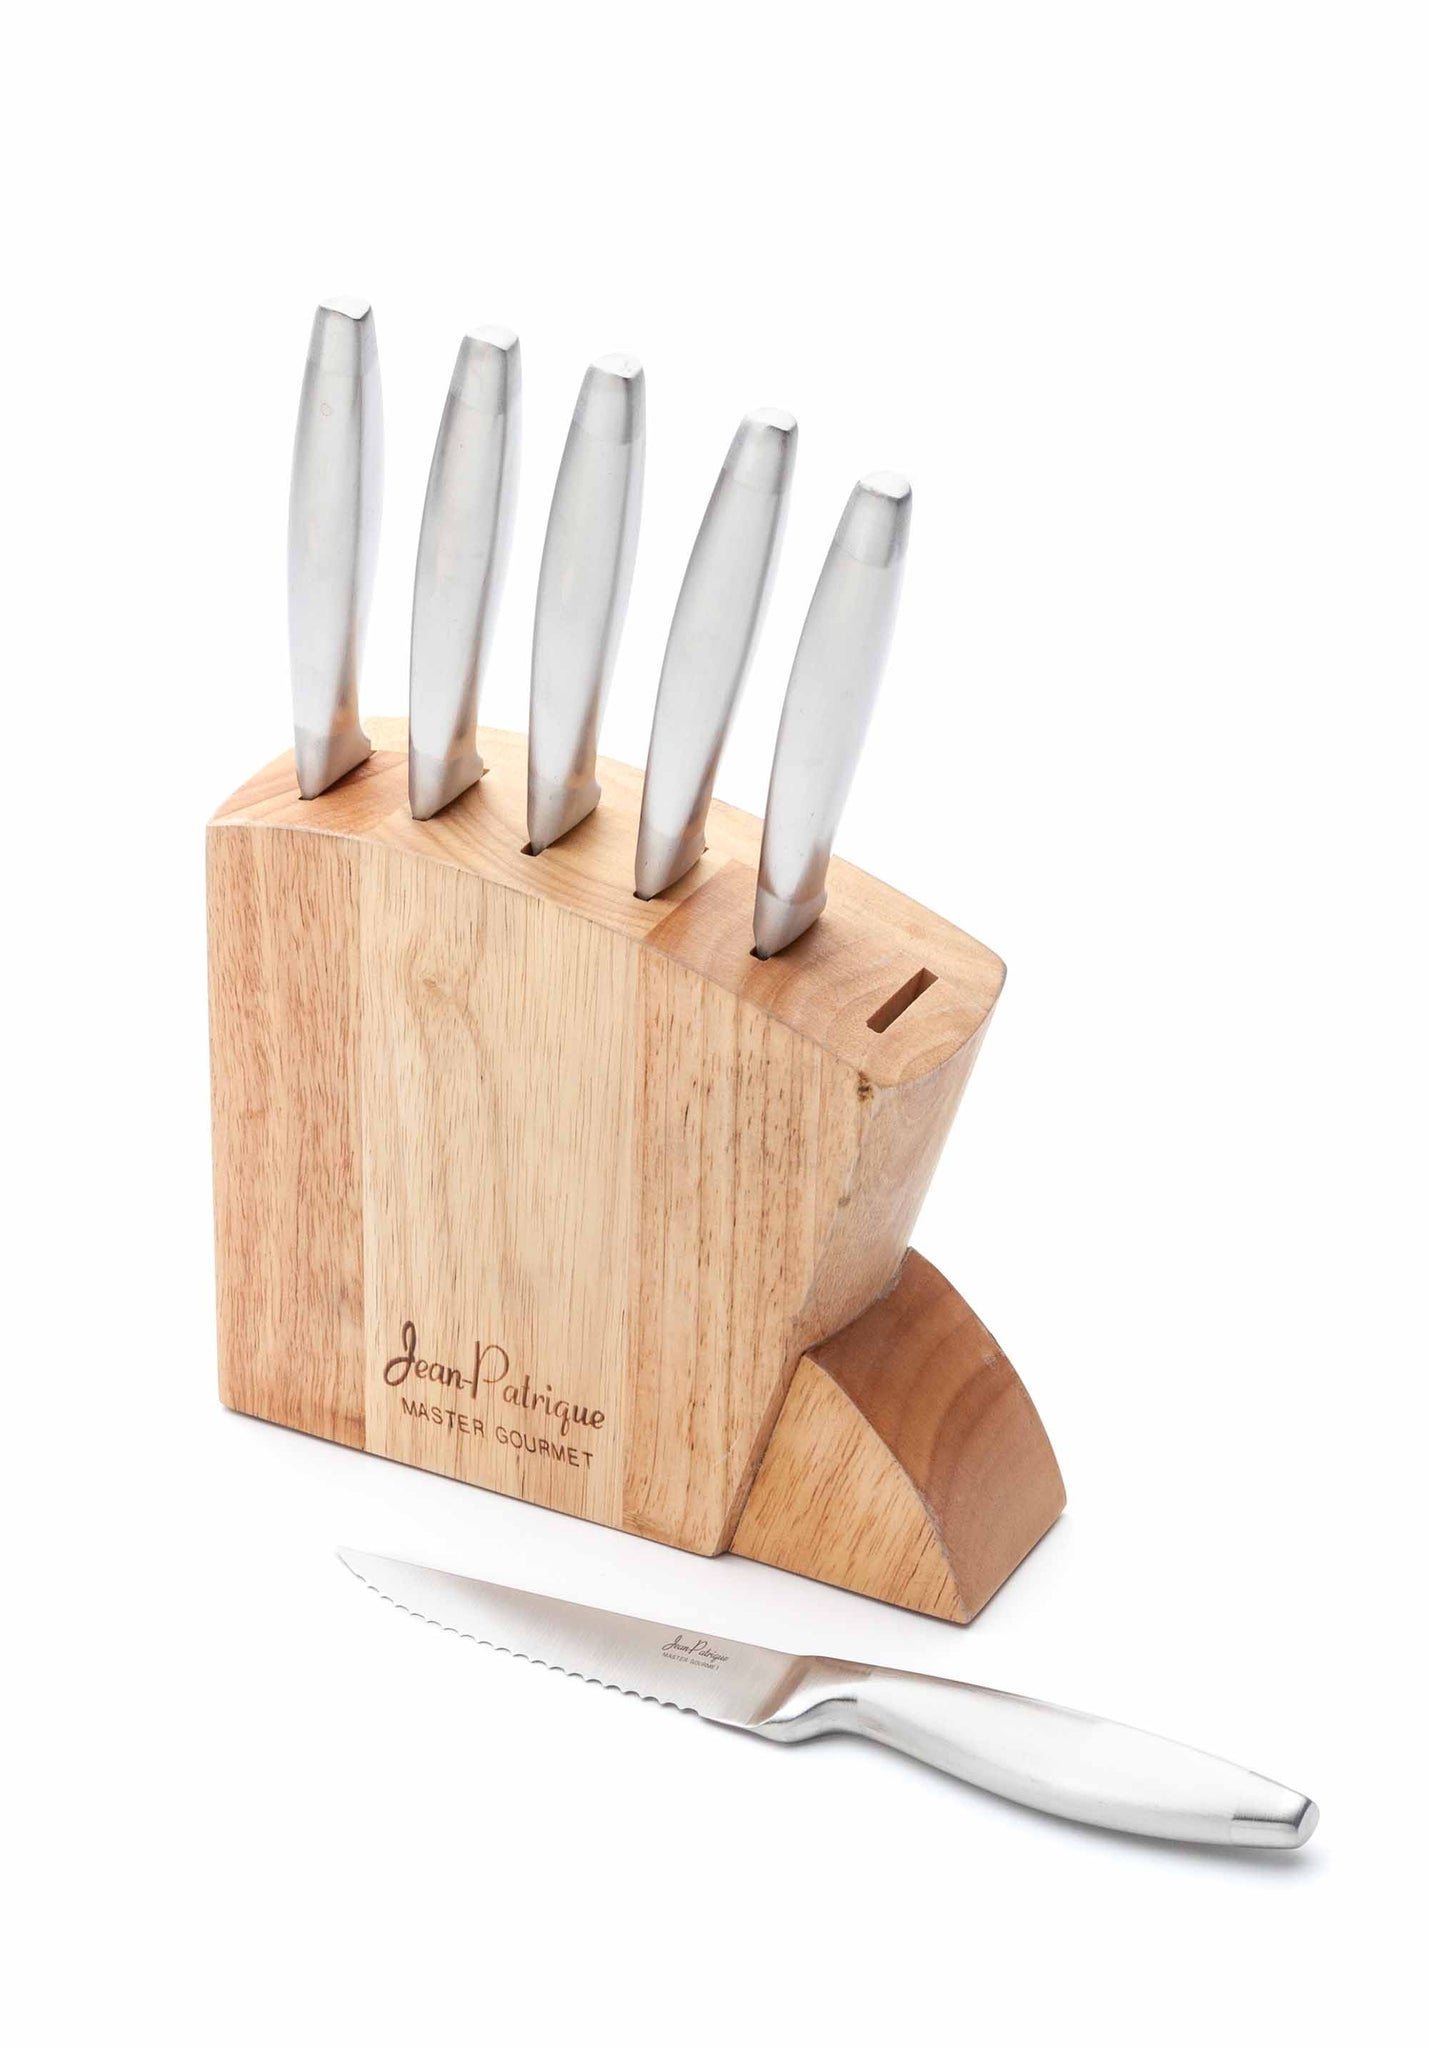 6-Piece Master Gourmet Stainless Steel Steak Knife Set